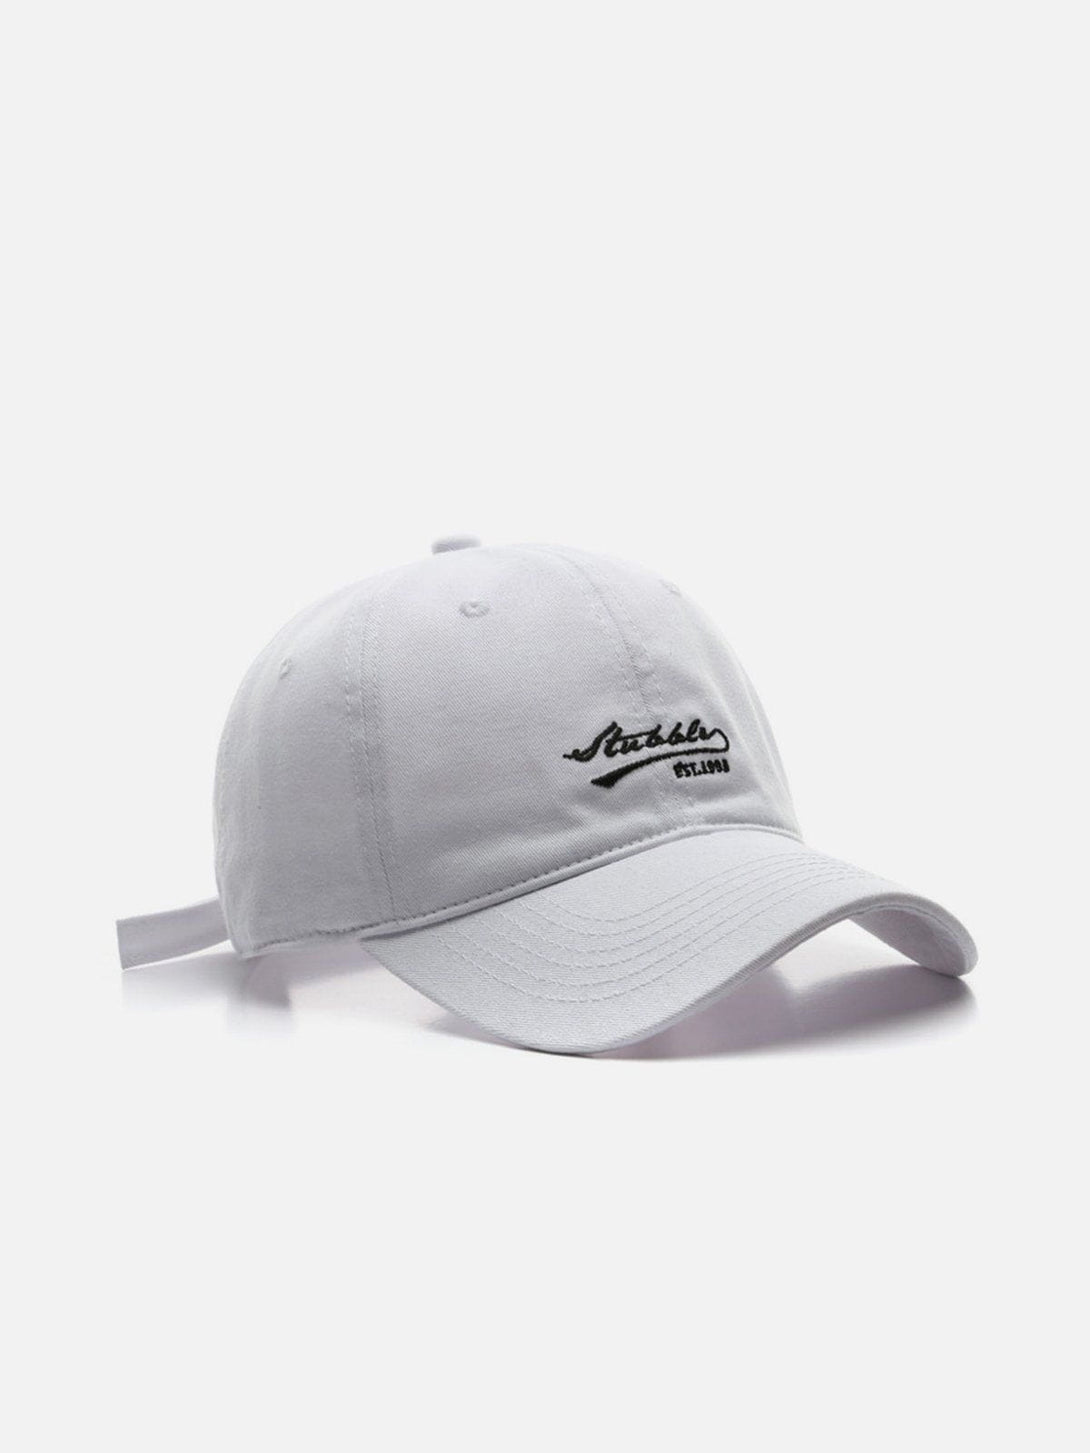 Majesda® - Embroidered Letters Baseball Cap- Outfit Ideas - Streetwear Fashion - majesda.com